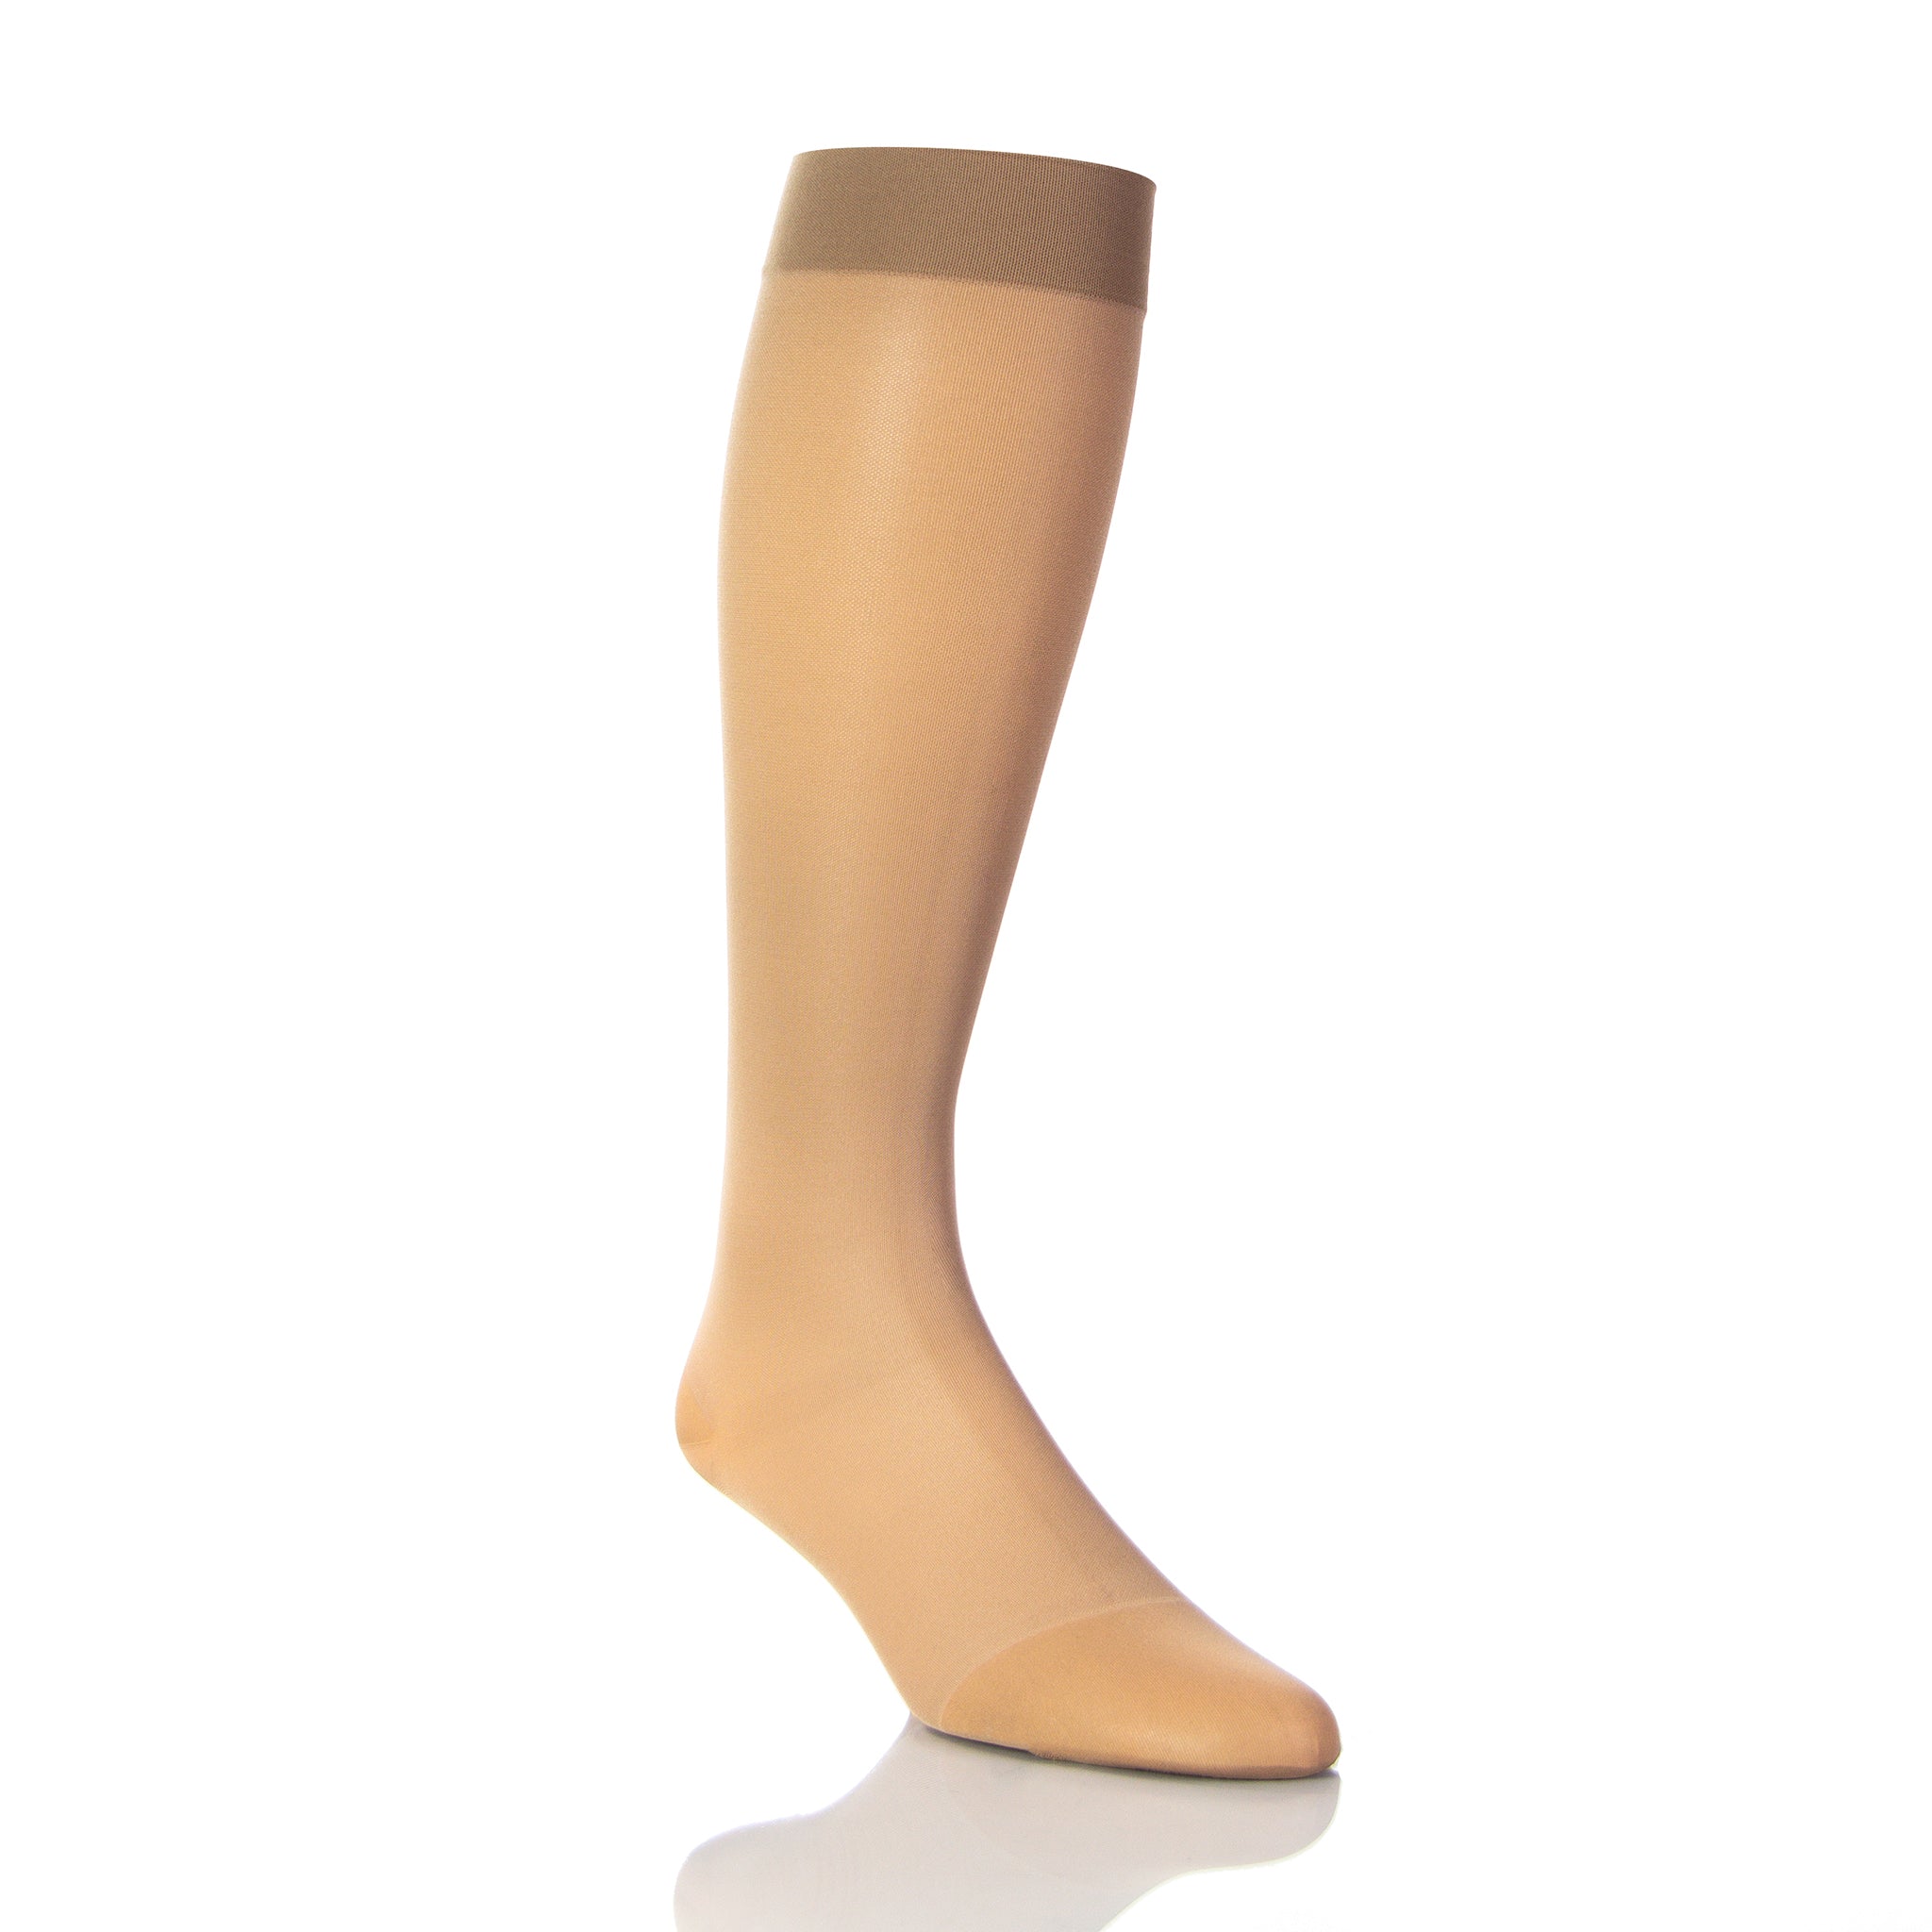 Men's Compression Socks - 30 40 mmHg